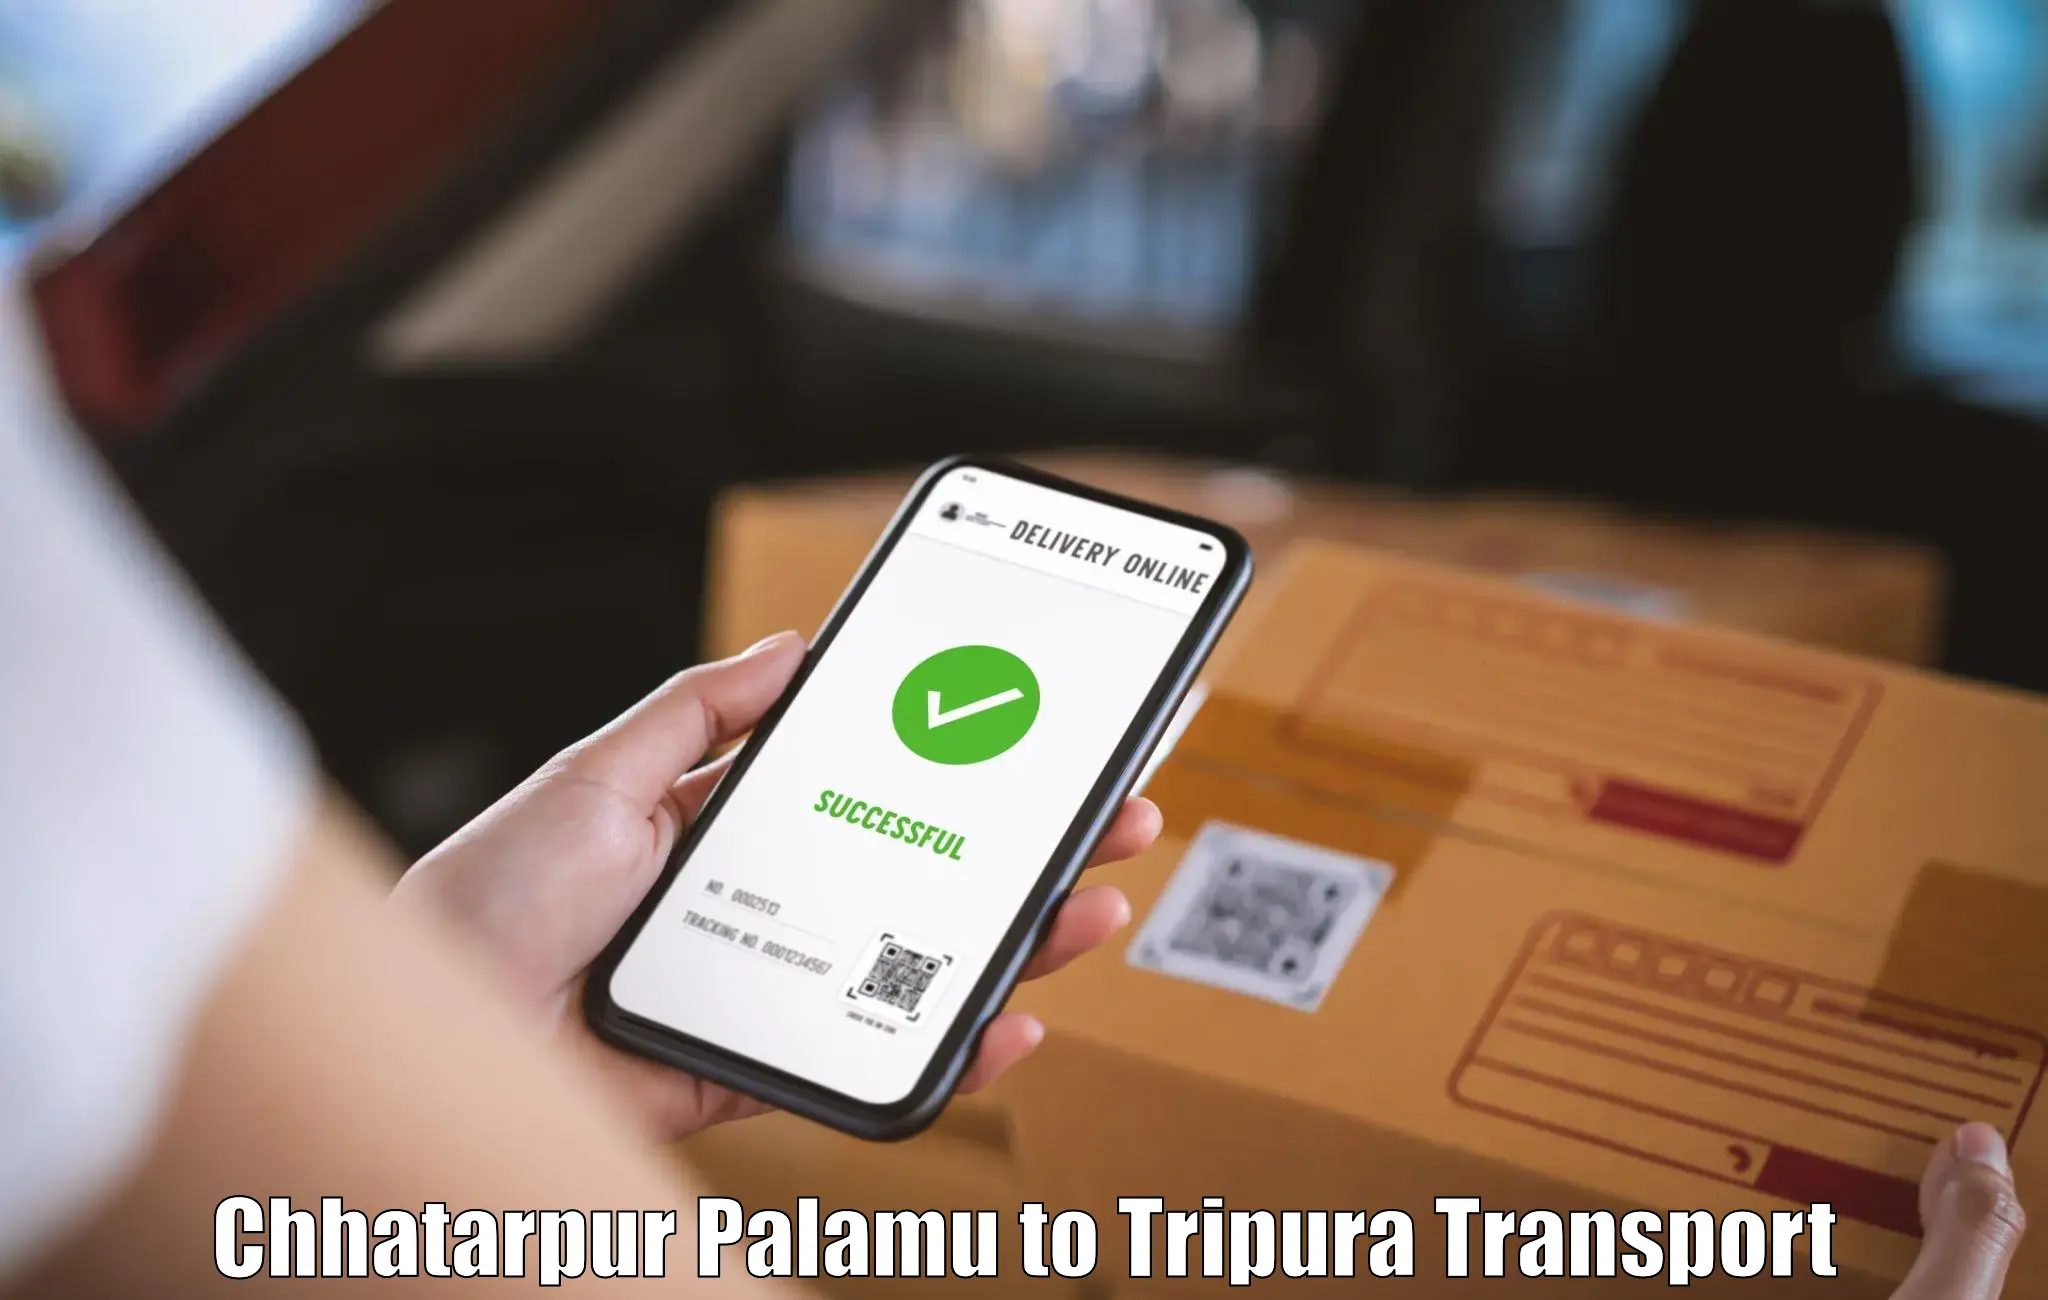 Nearby transport service Chhatarpur Palamu to Dharmanagar